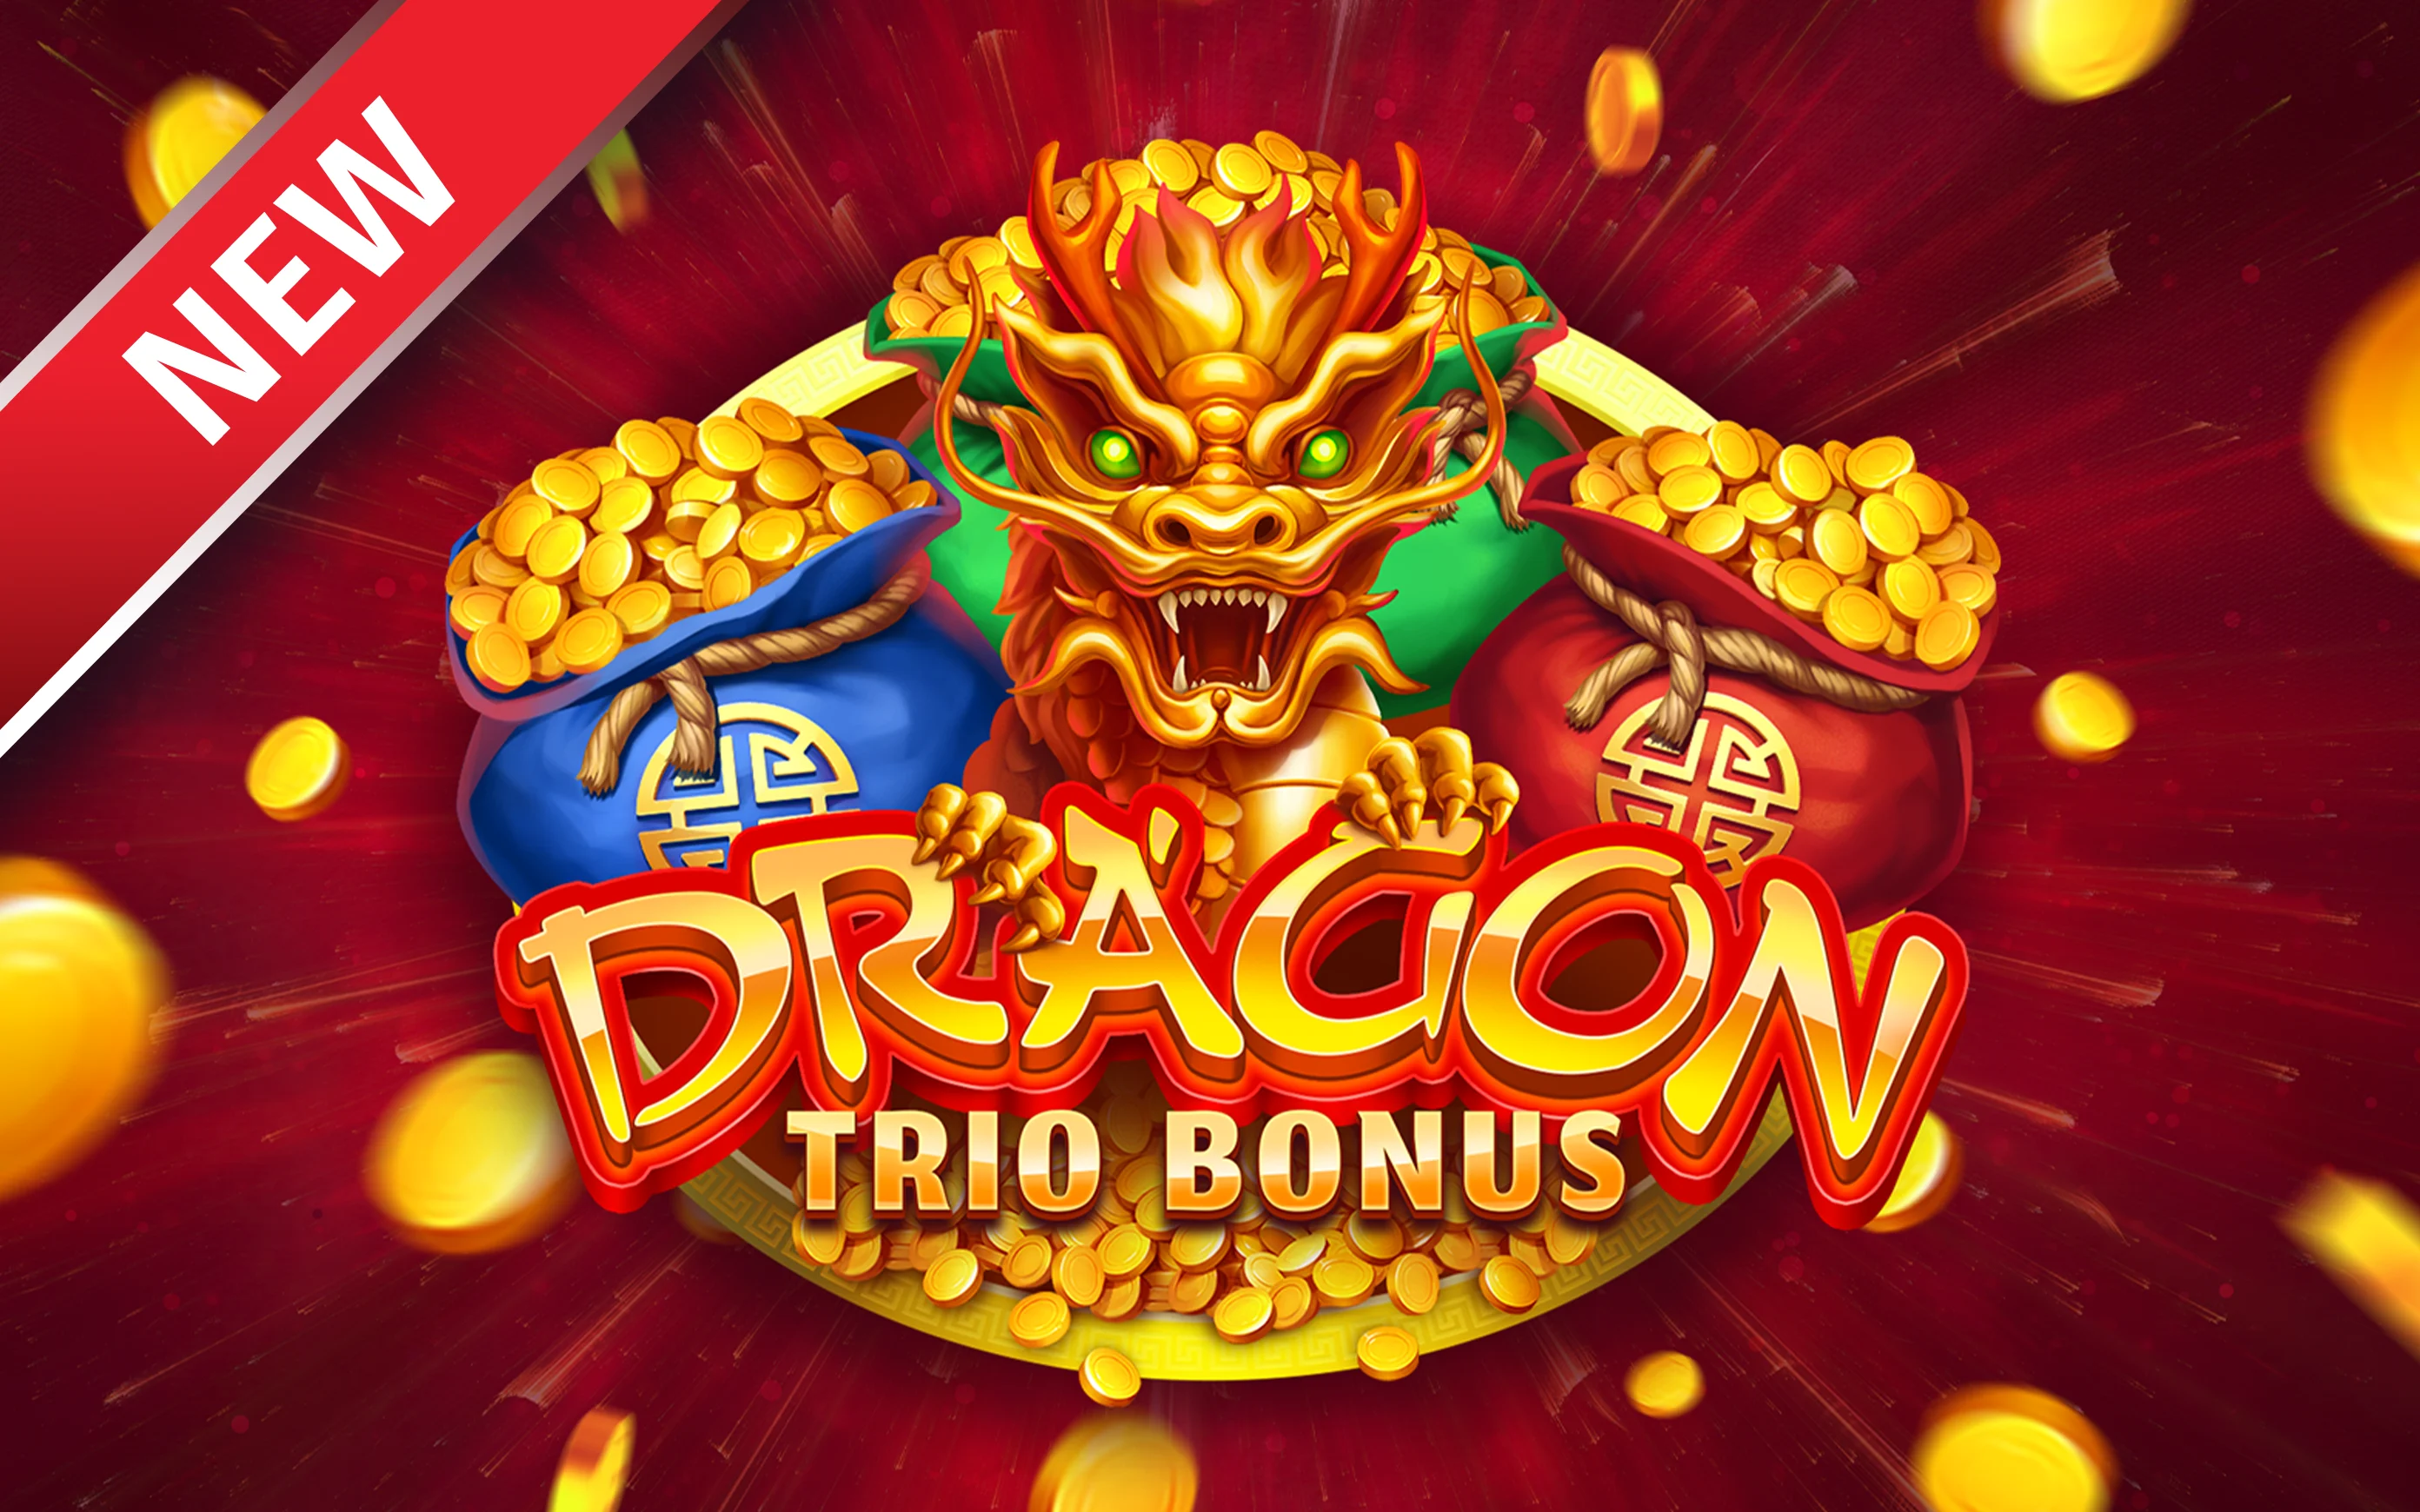 Play Dragon Trio Bonus on Starcasino.be online casino